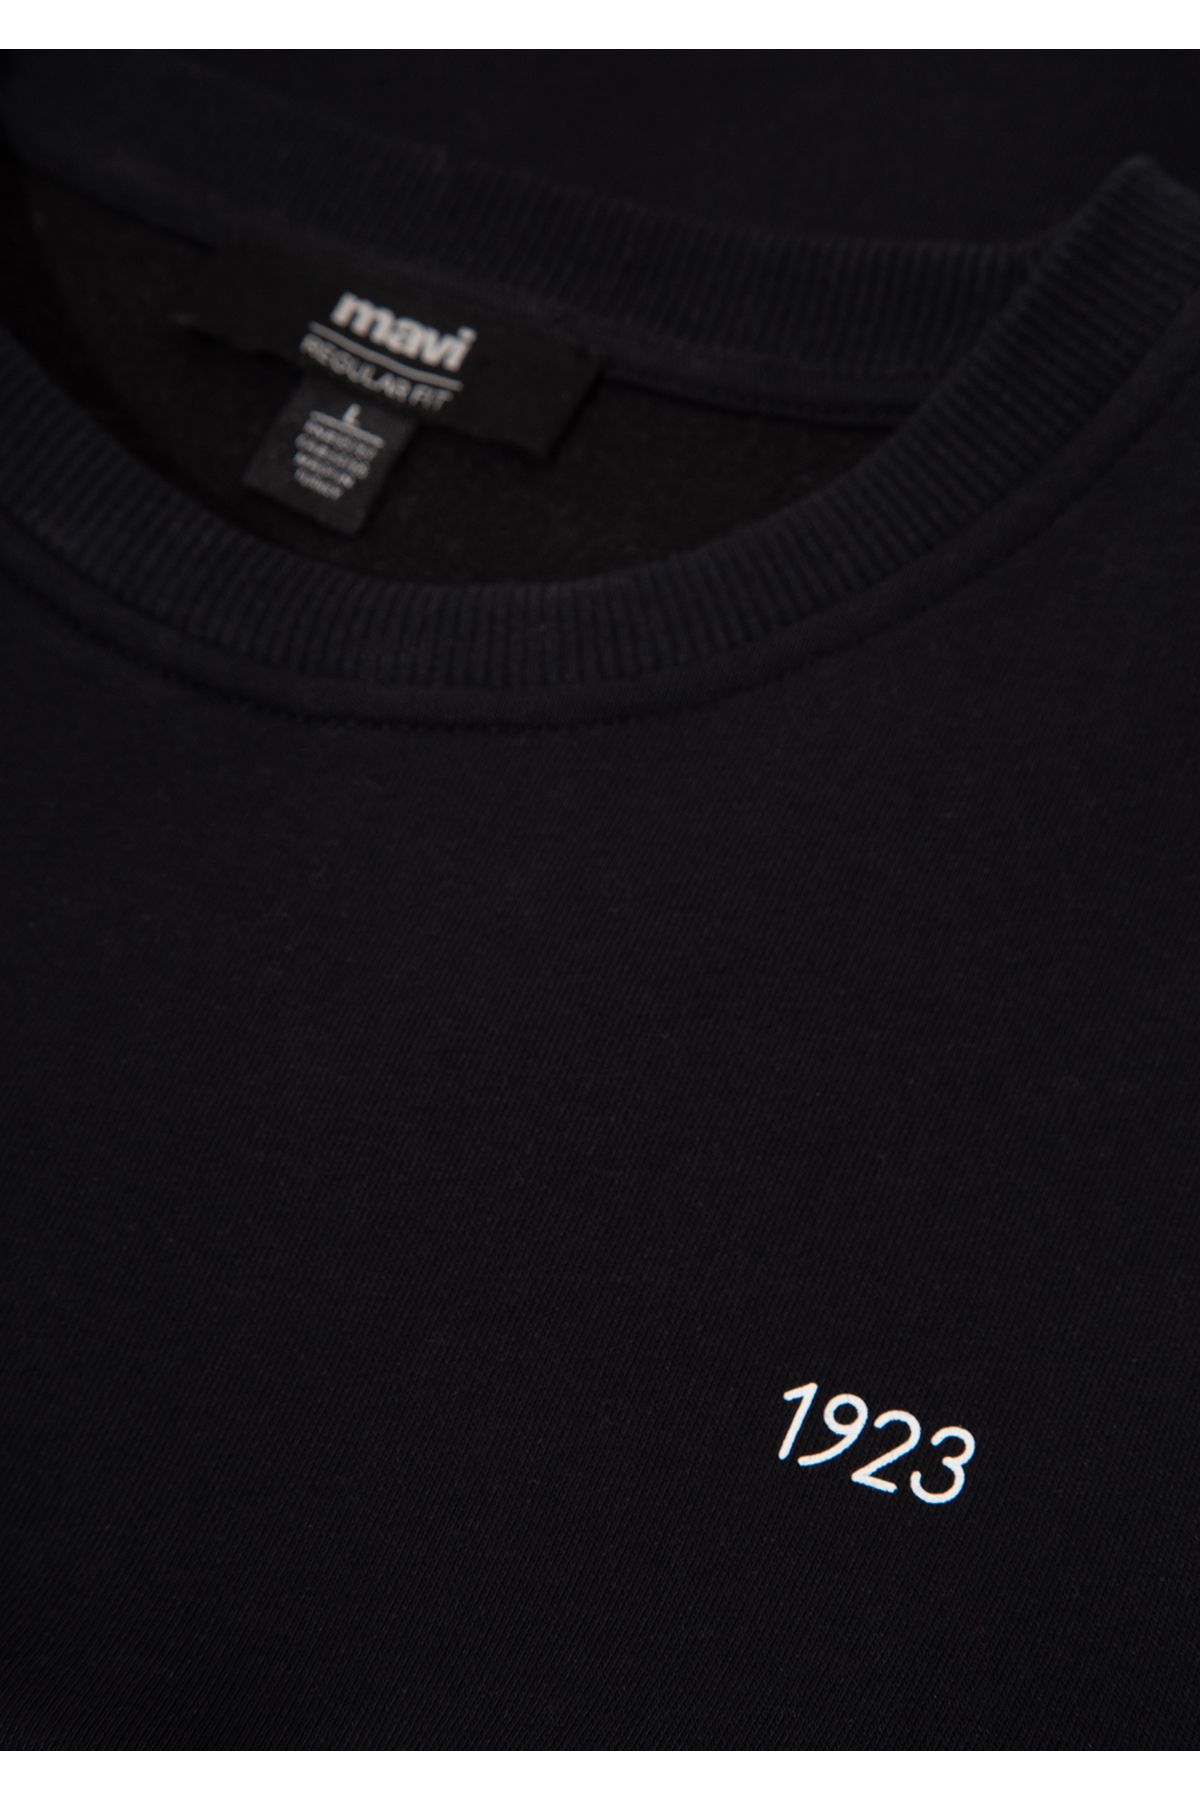 Mavi پیراهن سیاه با الفبای چاپ شده 0S10068-900